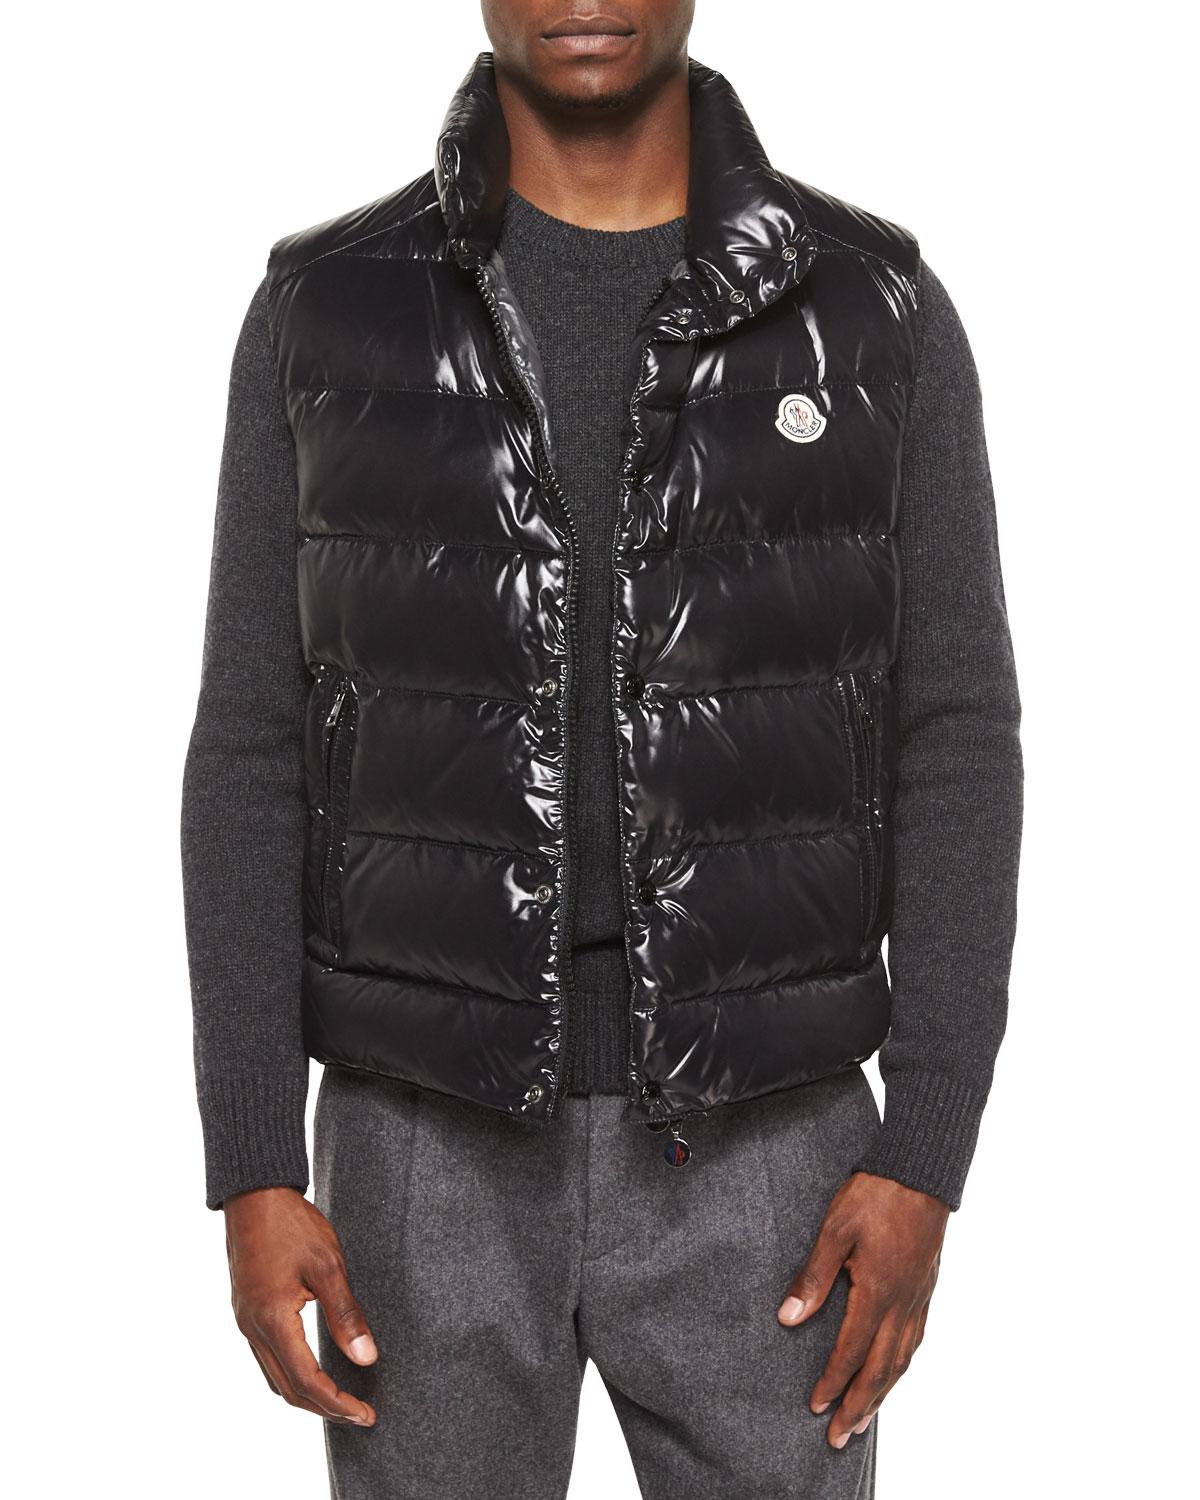 Moncler Synthetic Tib Puffer Vest in Black for Men - Lyst